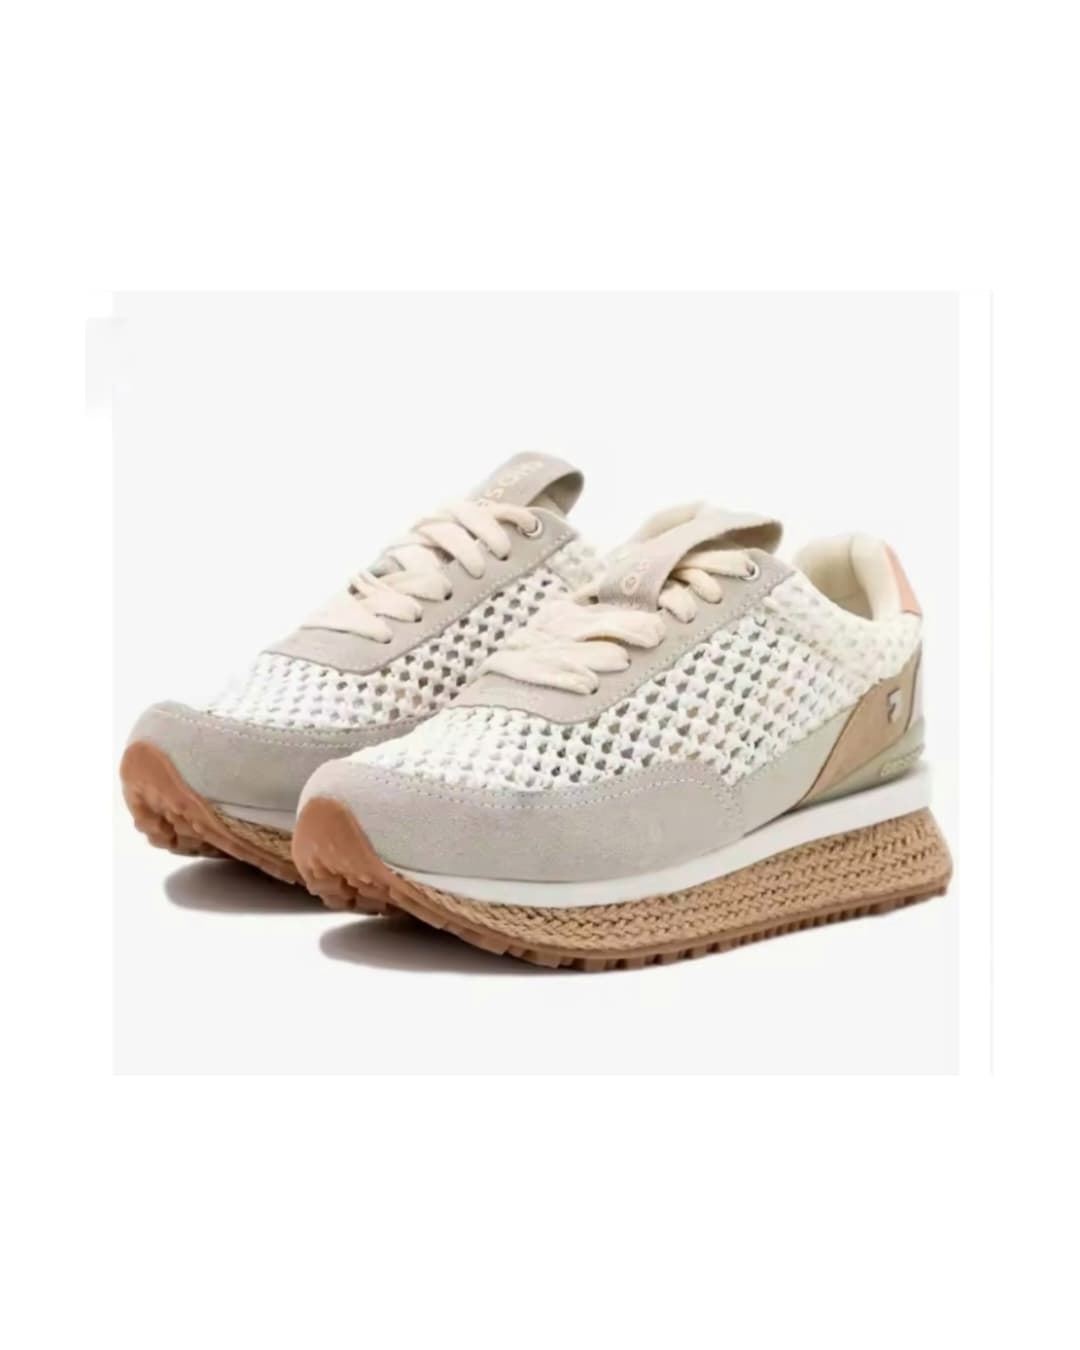 Gioseppo White Sneakers Creel mesh - Image 1